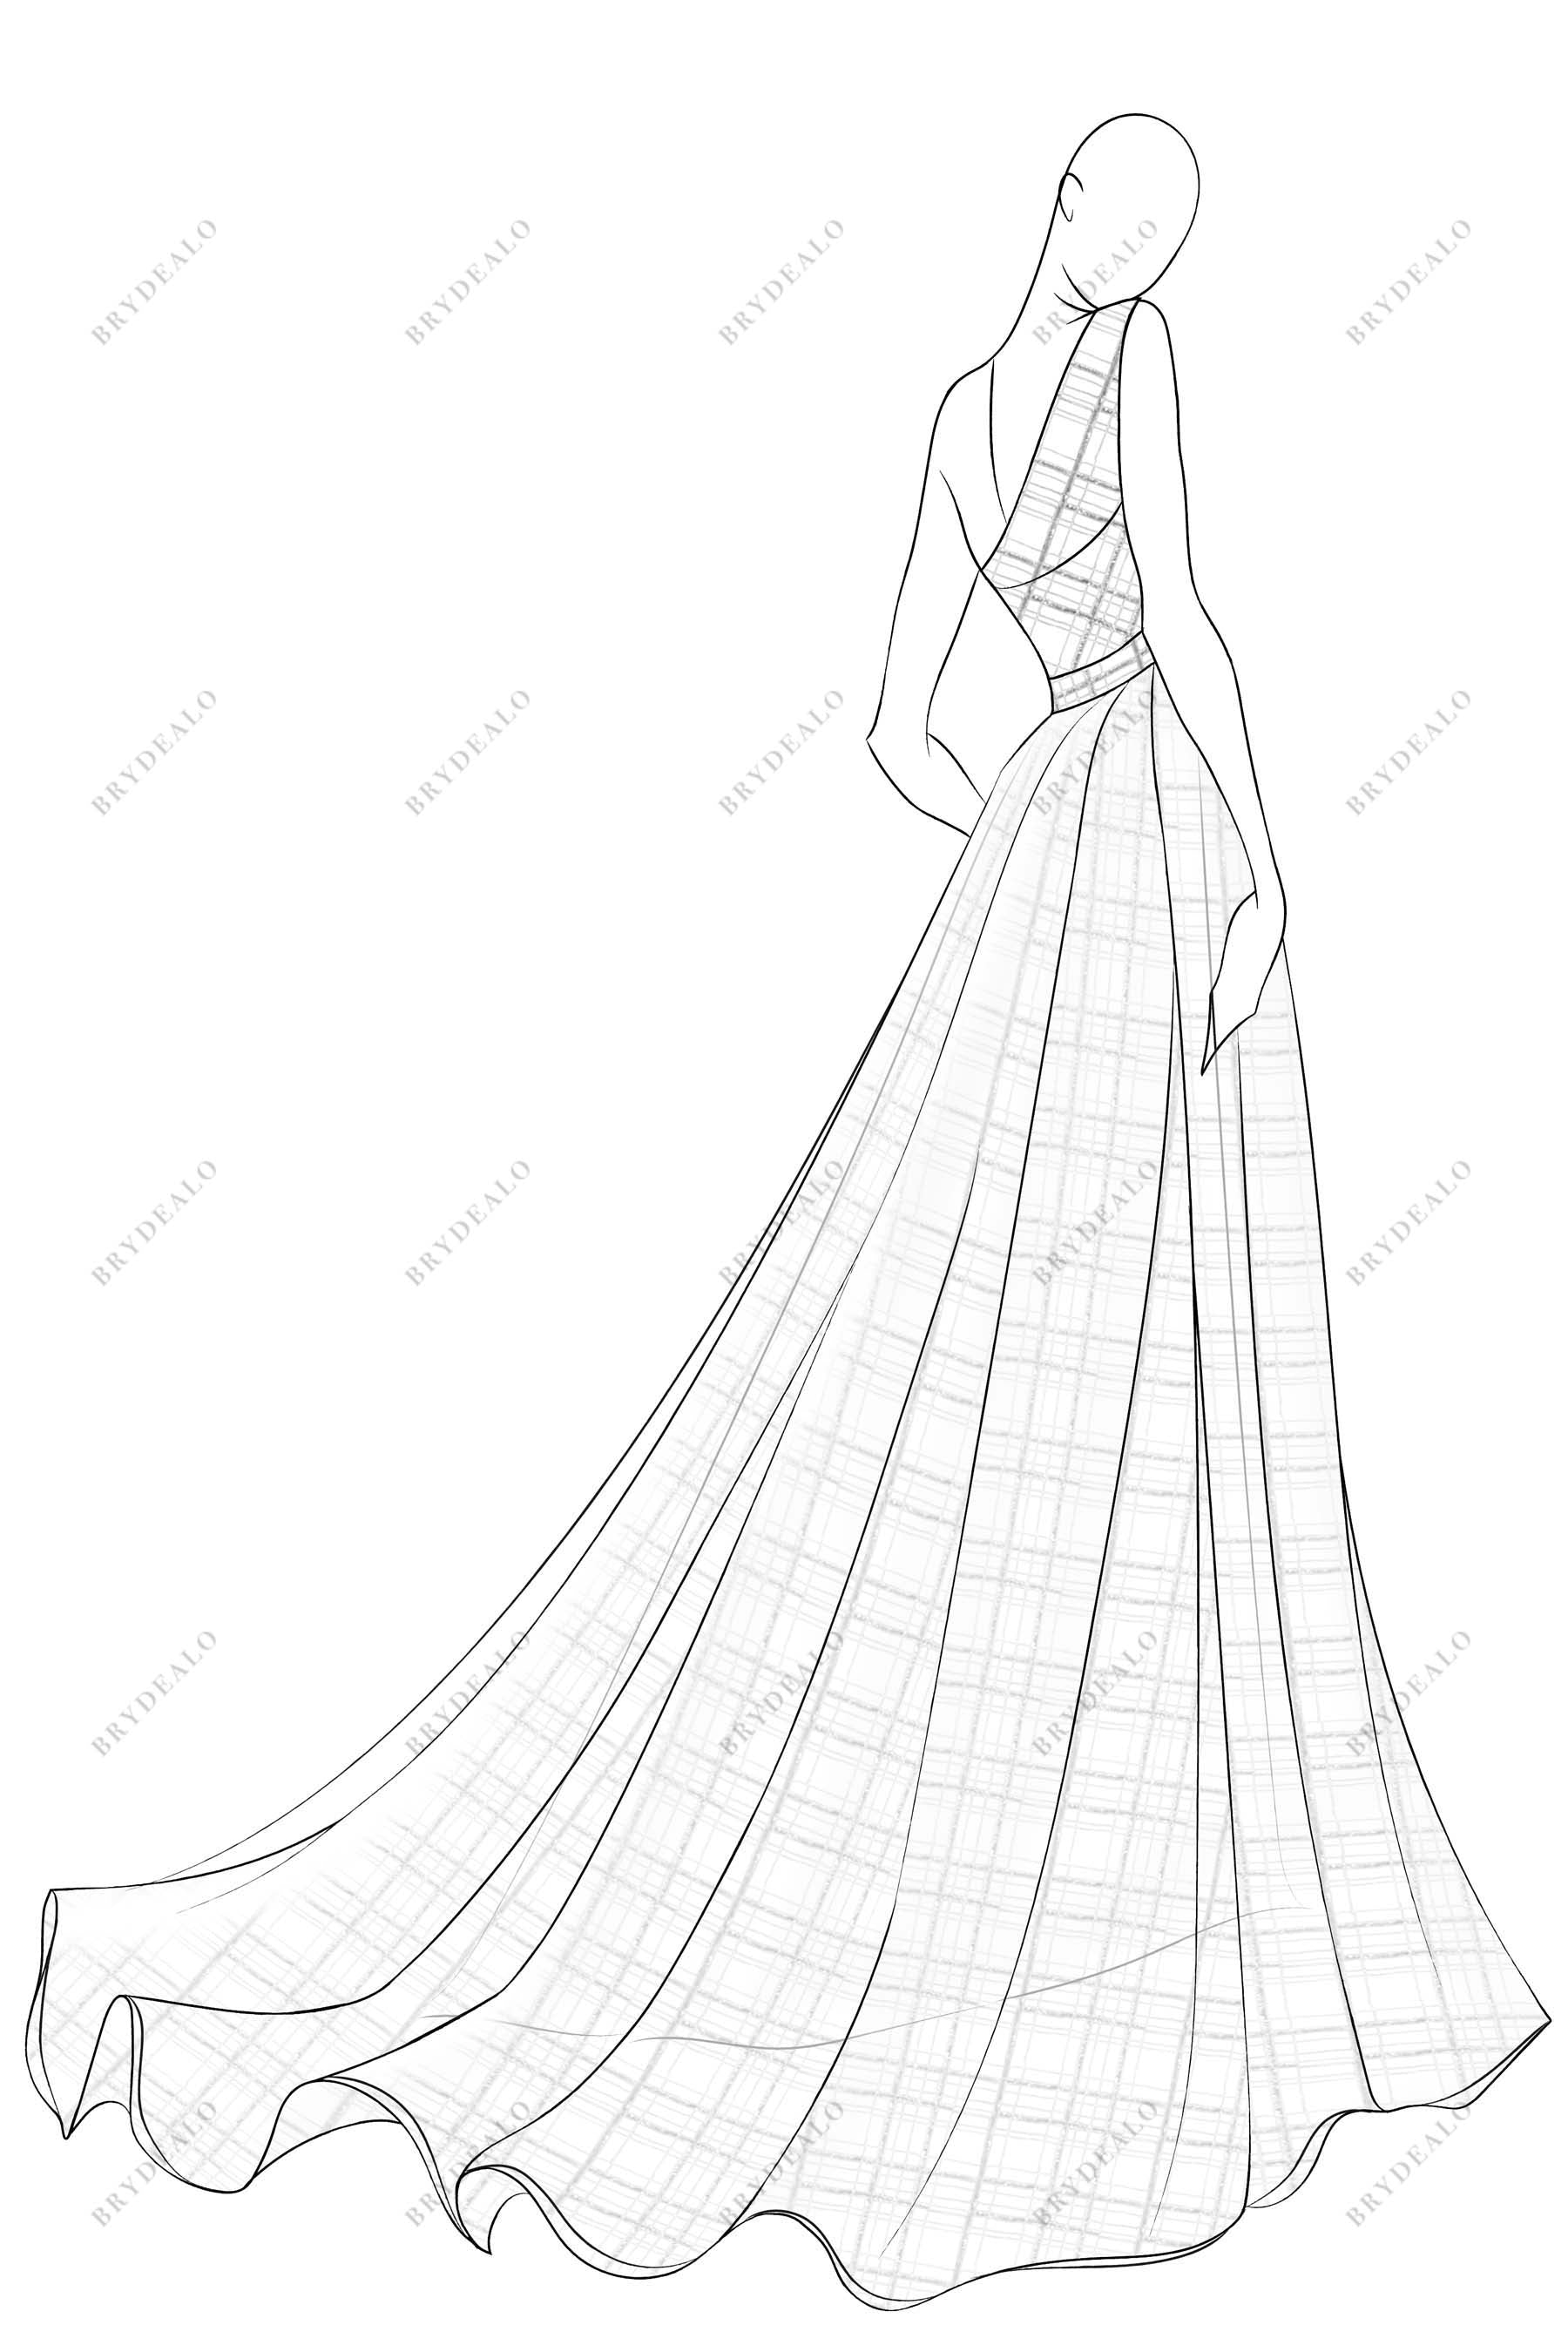 sweep train sequin A-line bridal dress sketch